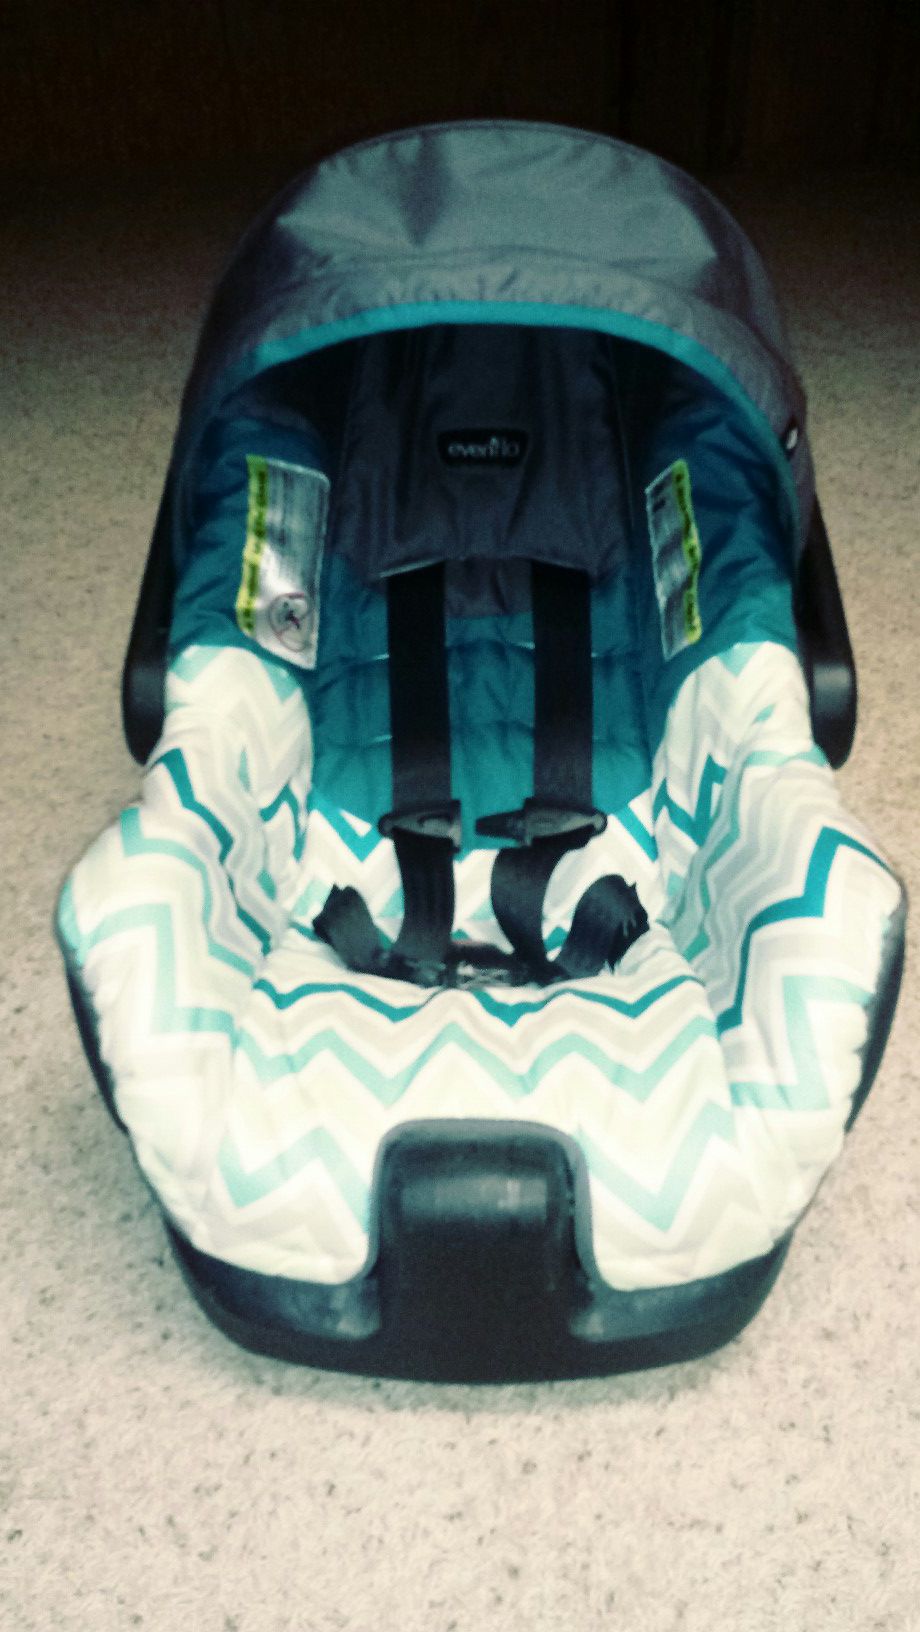 Evenflo nurture infant car seat